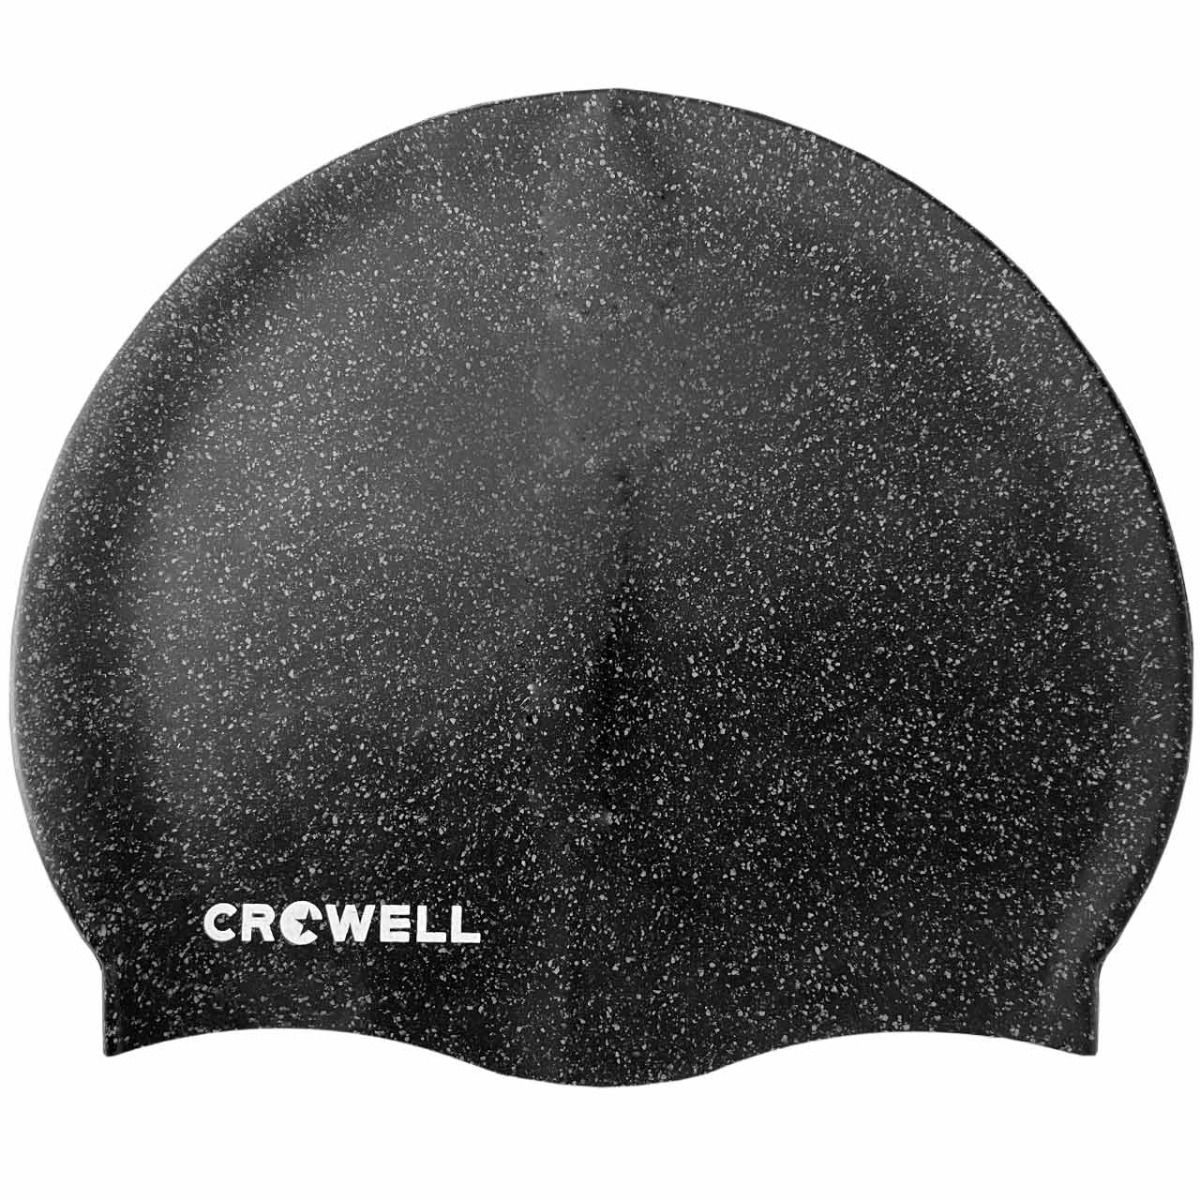 Crowell Plavecká čepice Recycling Pearl 01